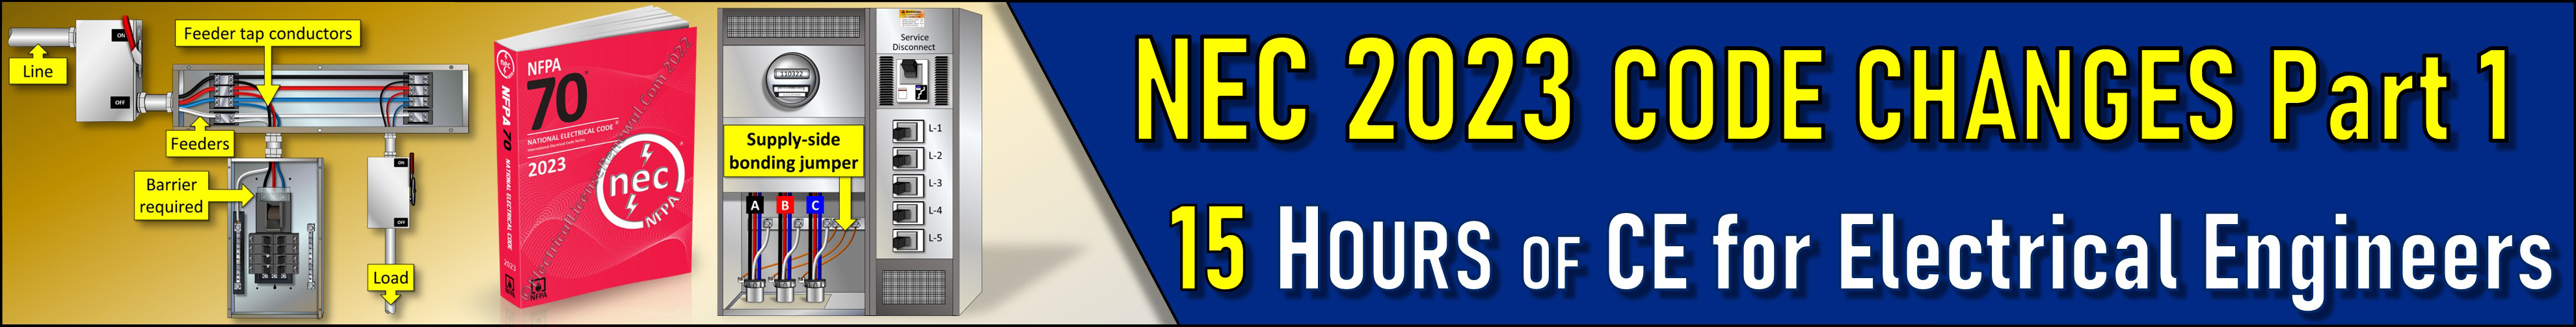 2023 NEC Code Changes Update Part 1 Banner